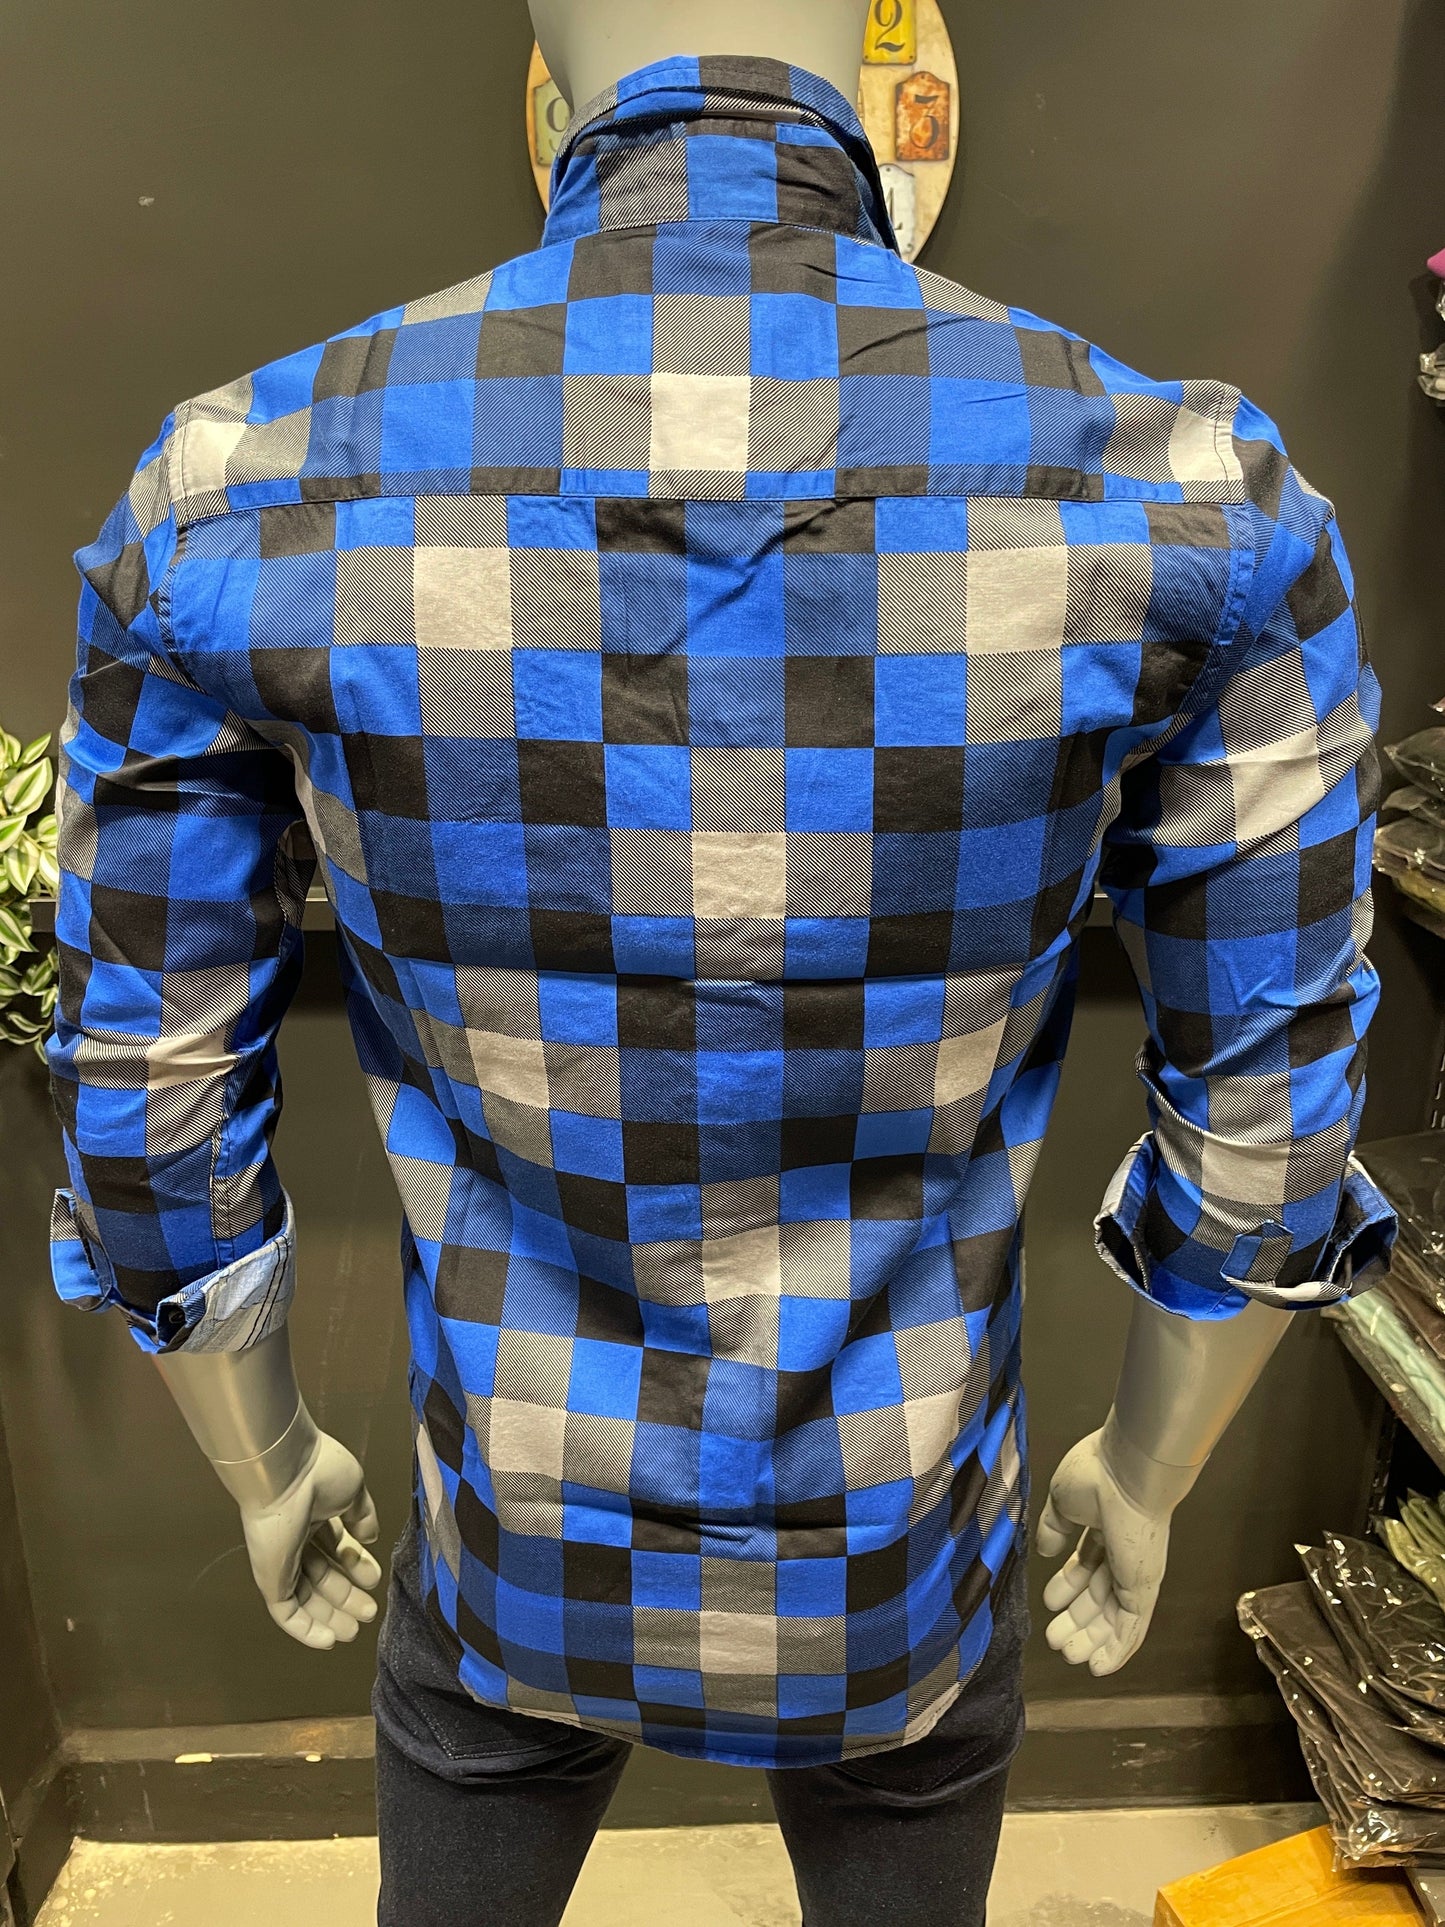 Blue Checks Shirt